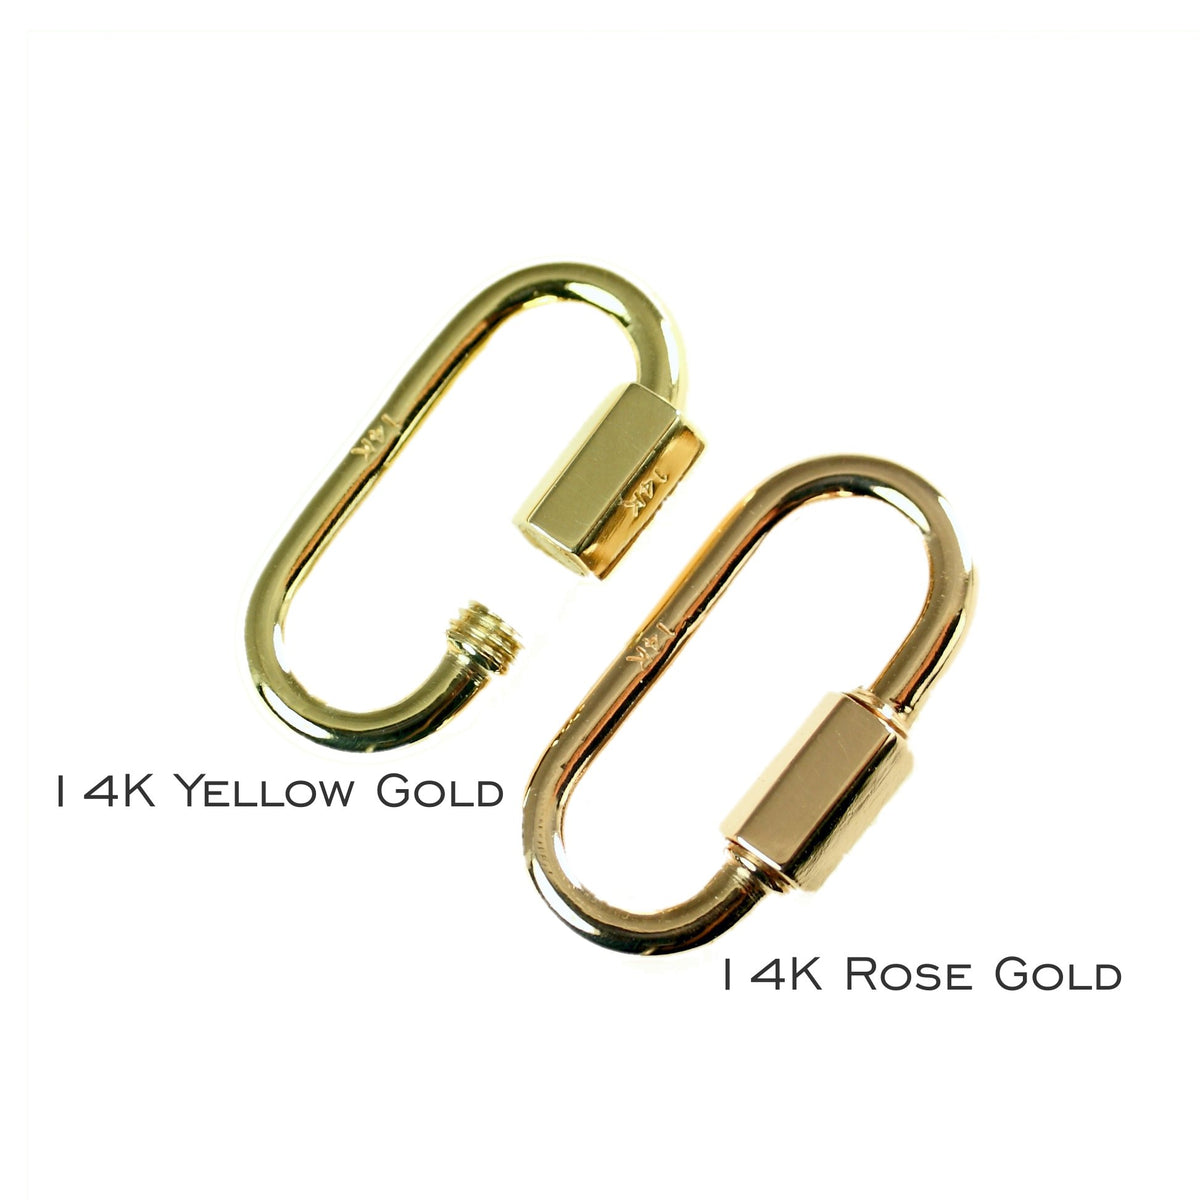 14k Gold Carabiner Necklace, 14k Gold Carabiner Lock, 20 MM Carabiner, Oval  Link Chain Necklace, Carabiner Pendant, Handmade Carabiner